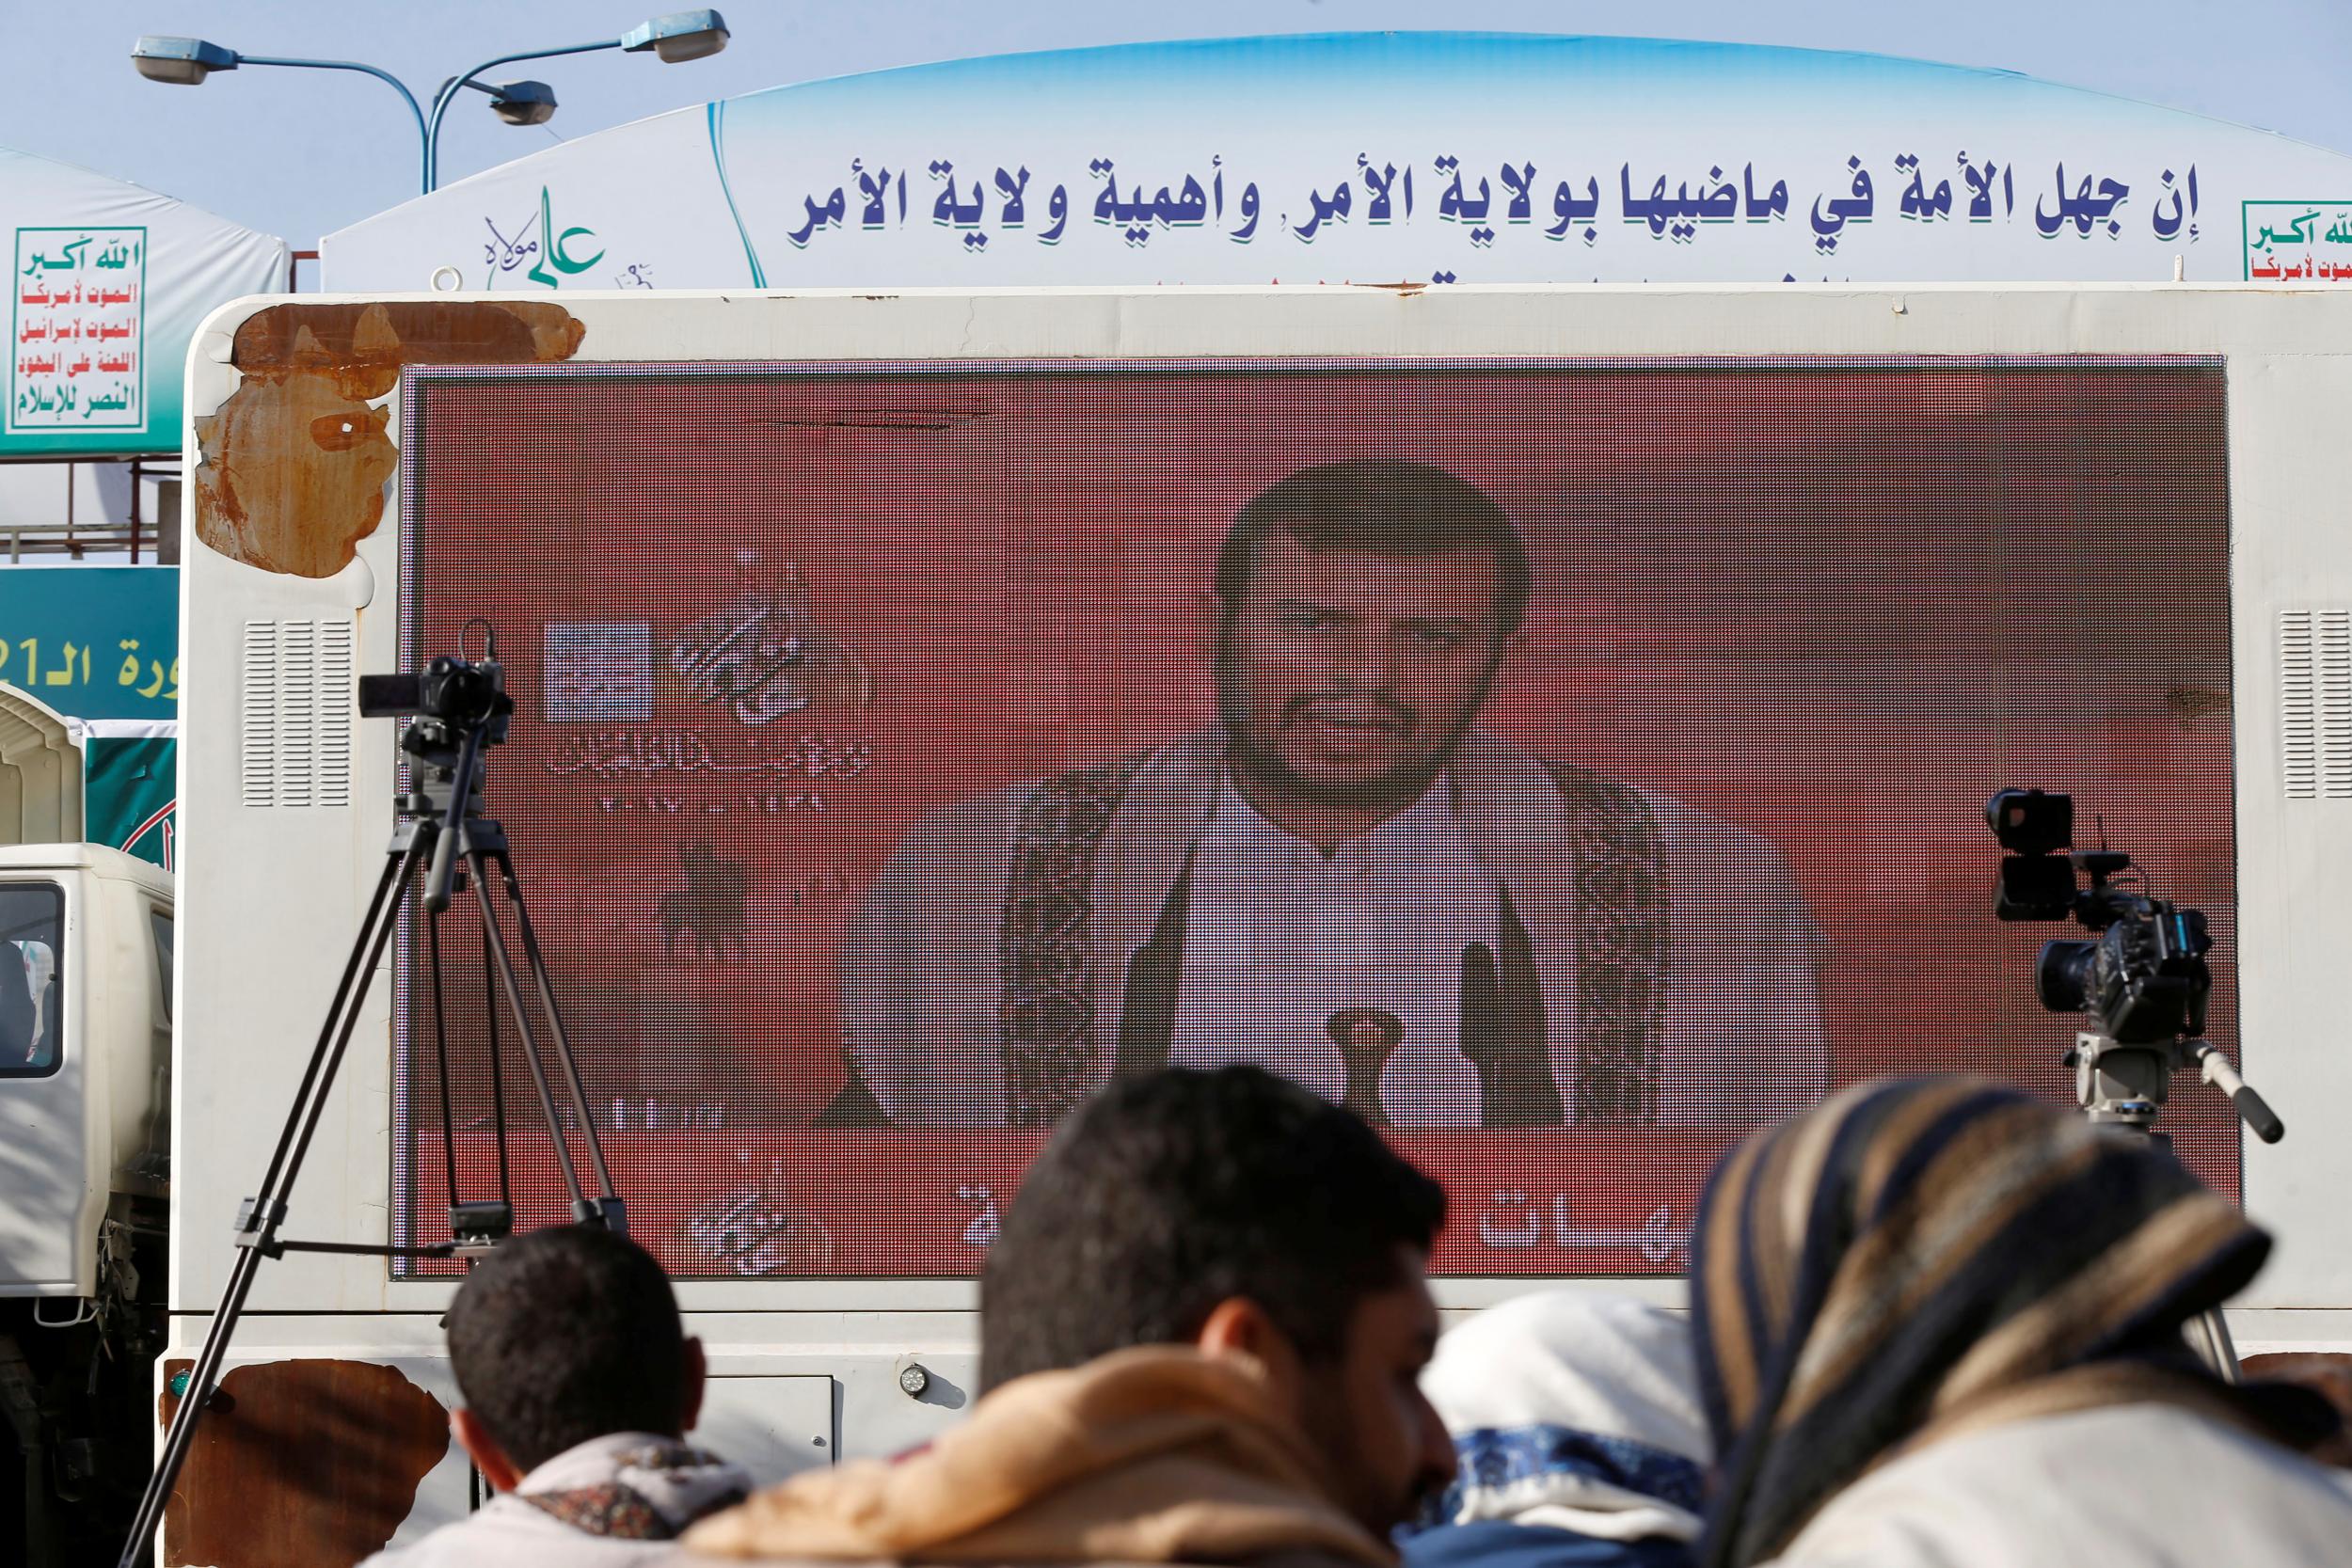 Leader of the Shi’ite Houthi movement, Abdul-Malik Badruddin al-Houthi, addresses supporters via a screen